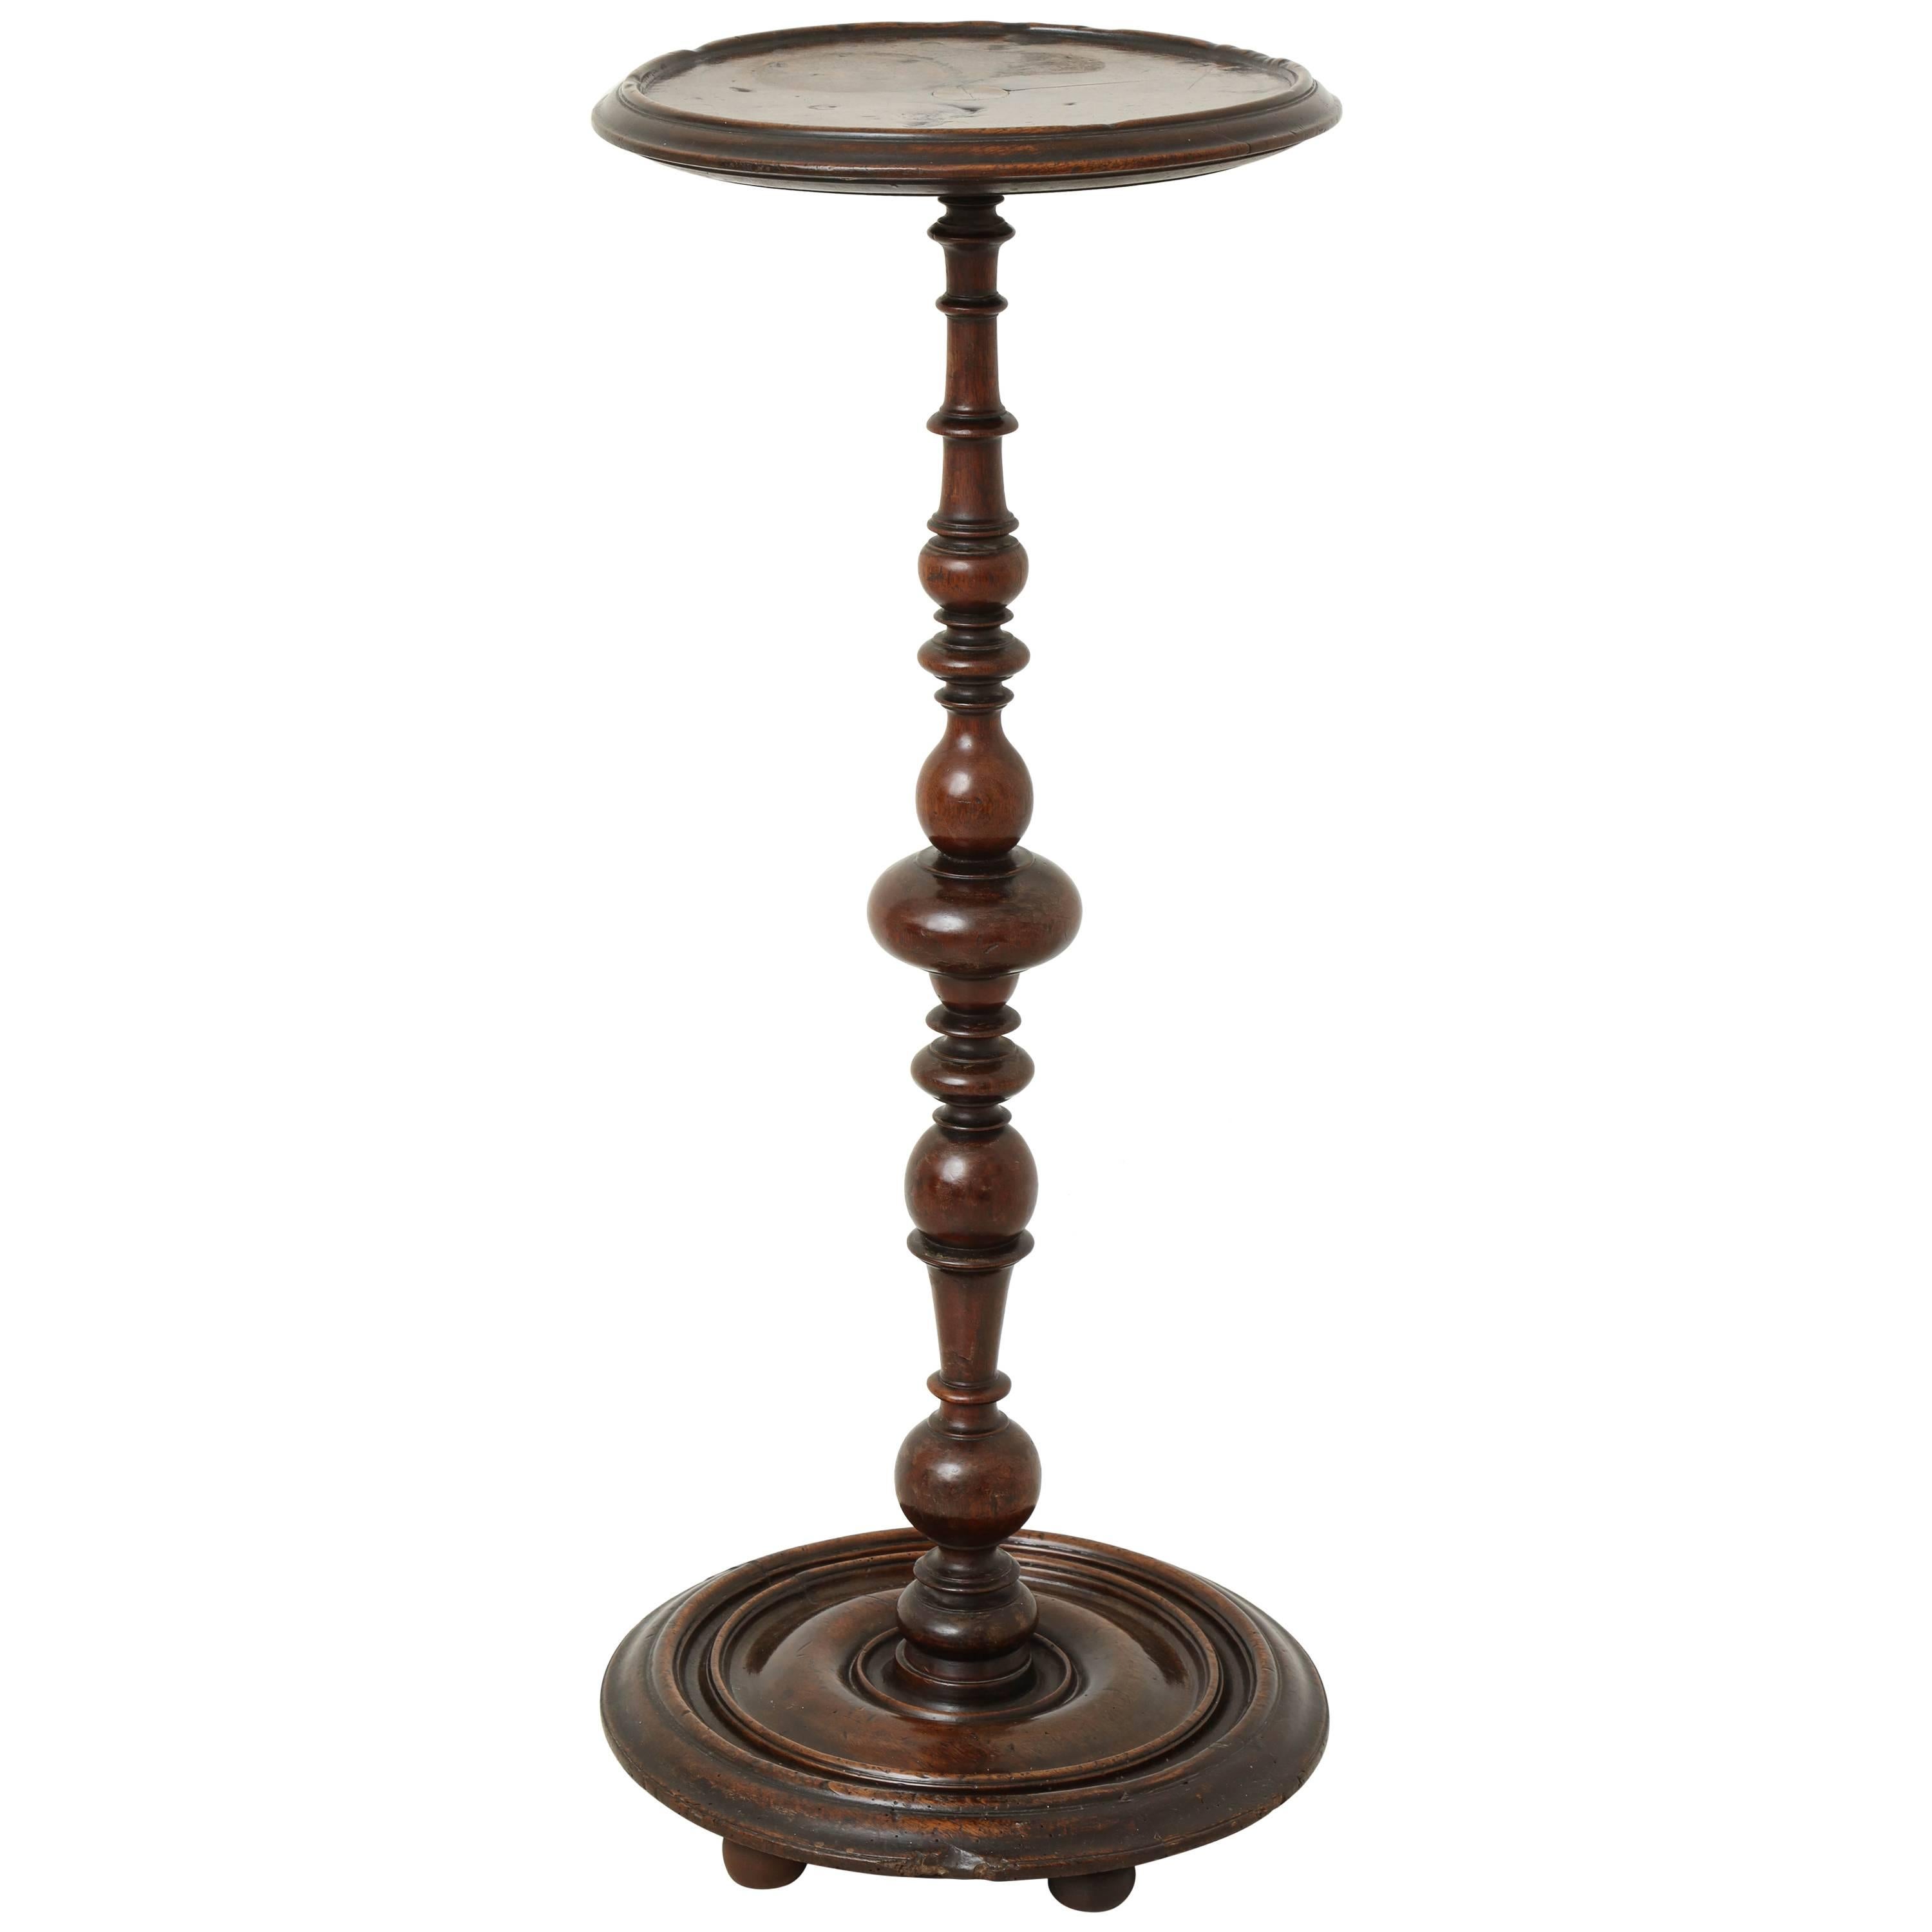 Early 18th Century Italian Turned Walnut Pedestal Table